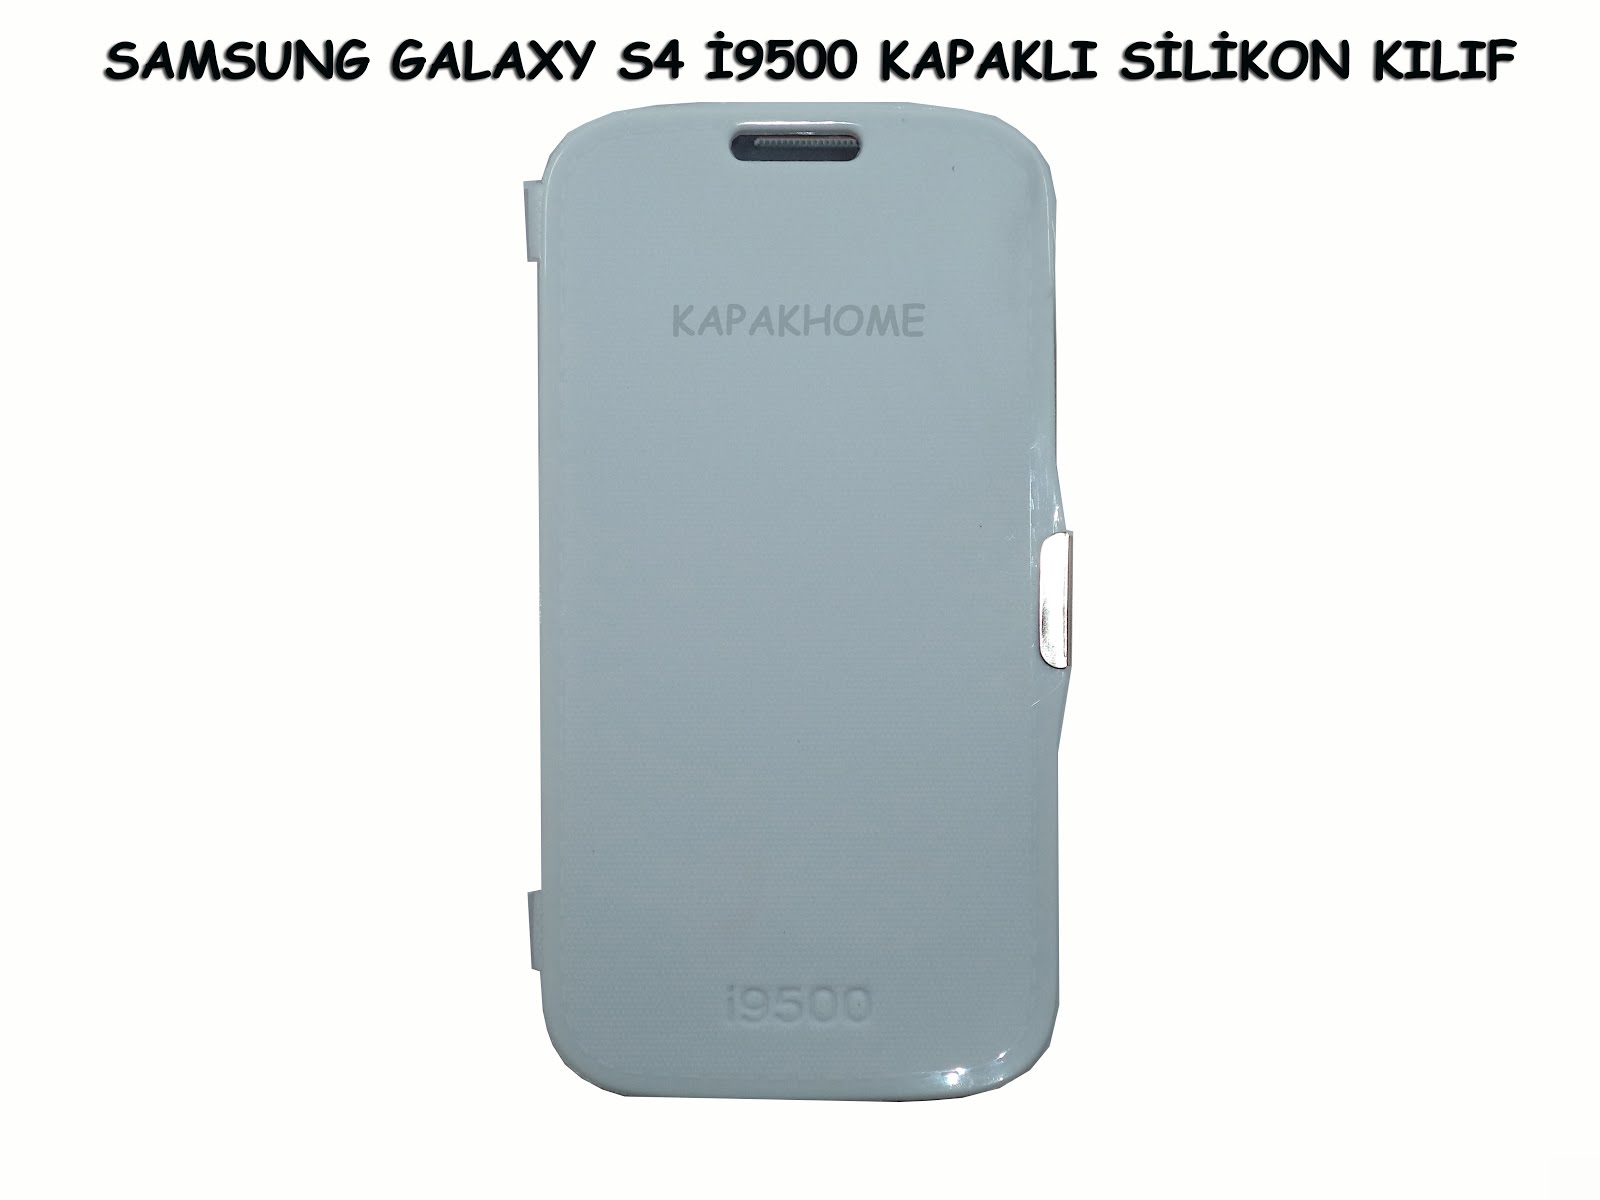 Samsung S4 Silikon Kılıf